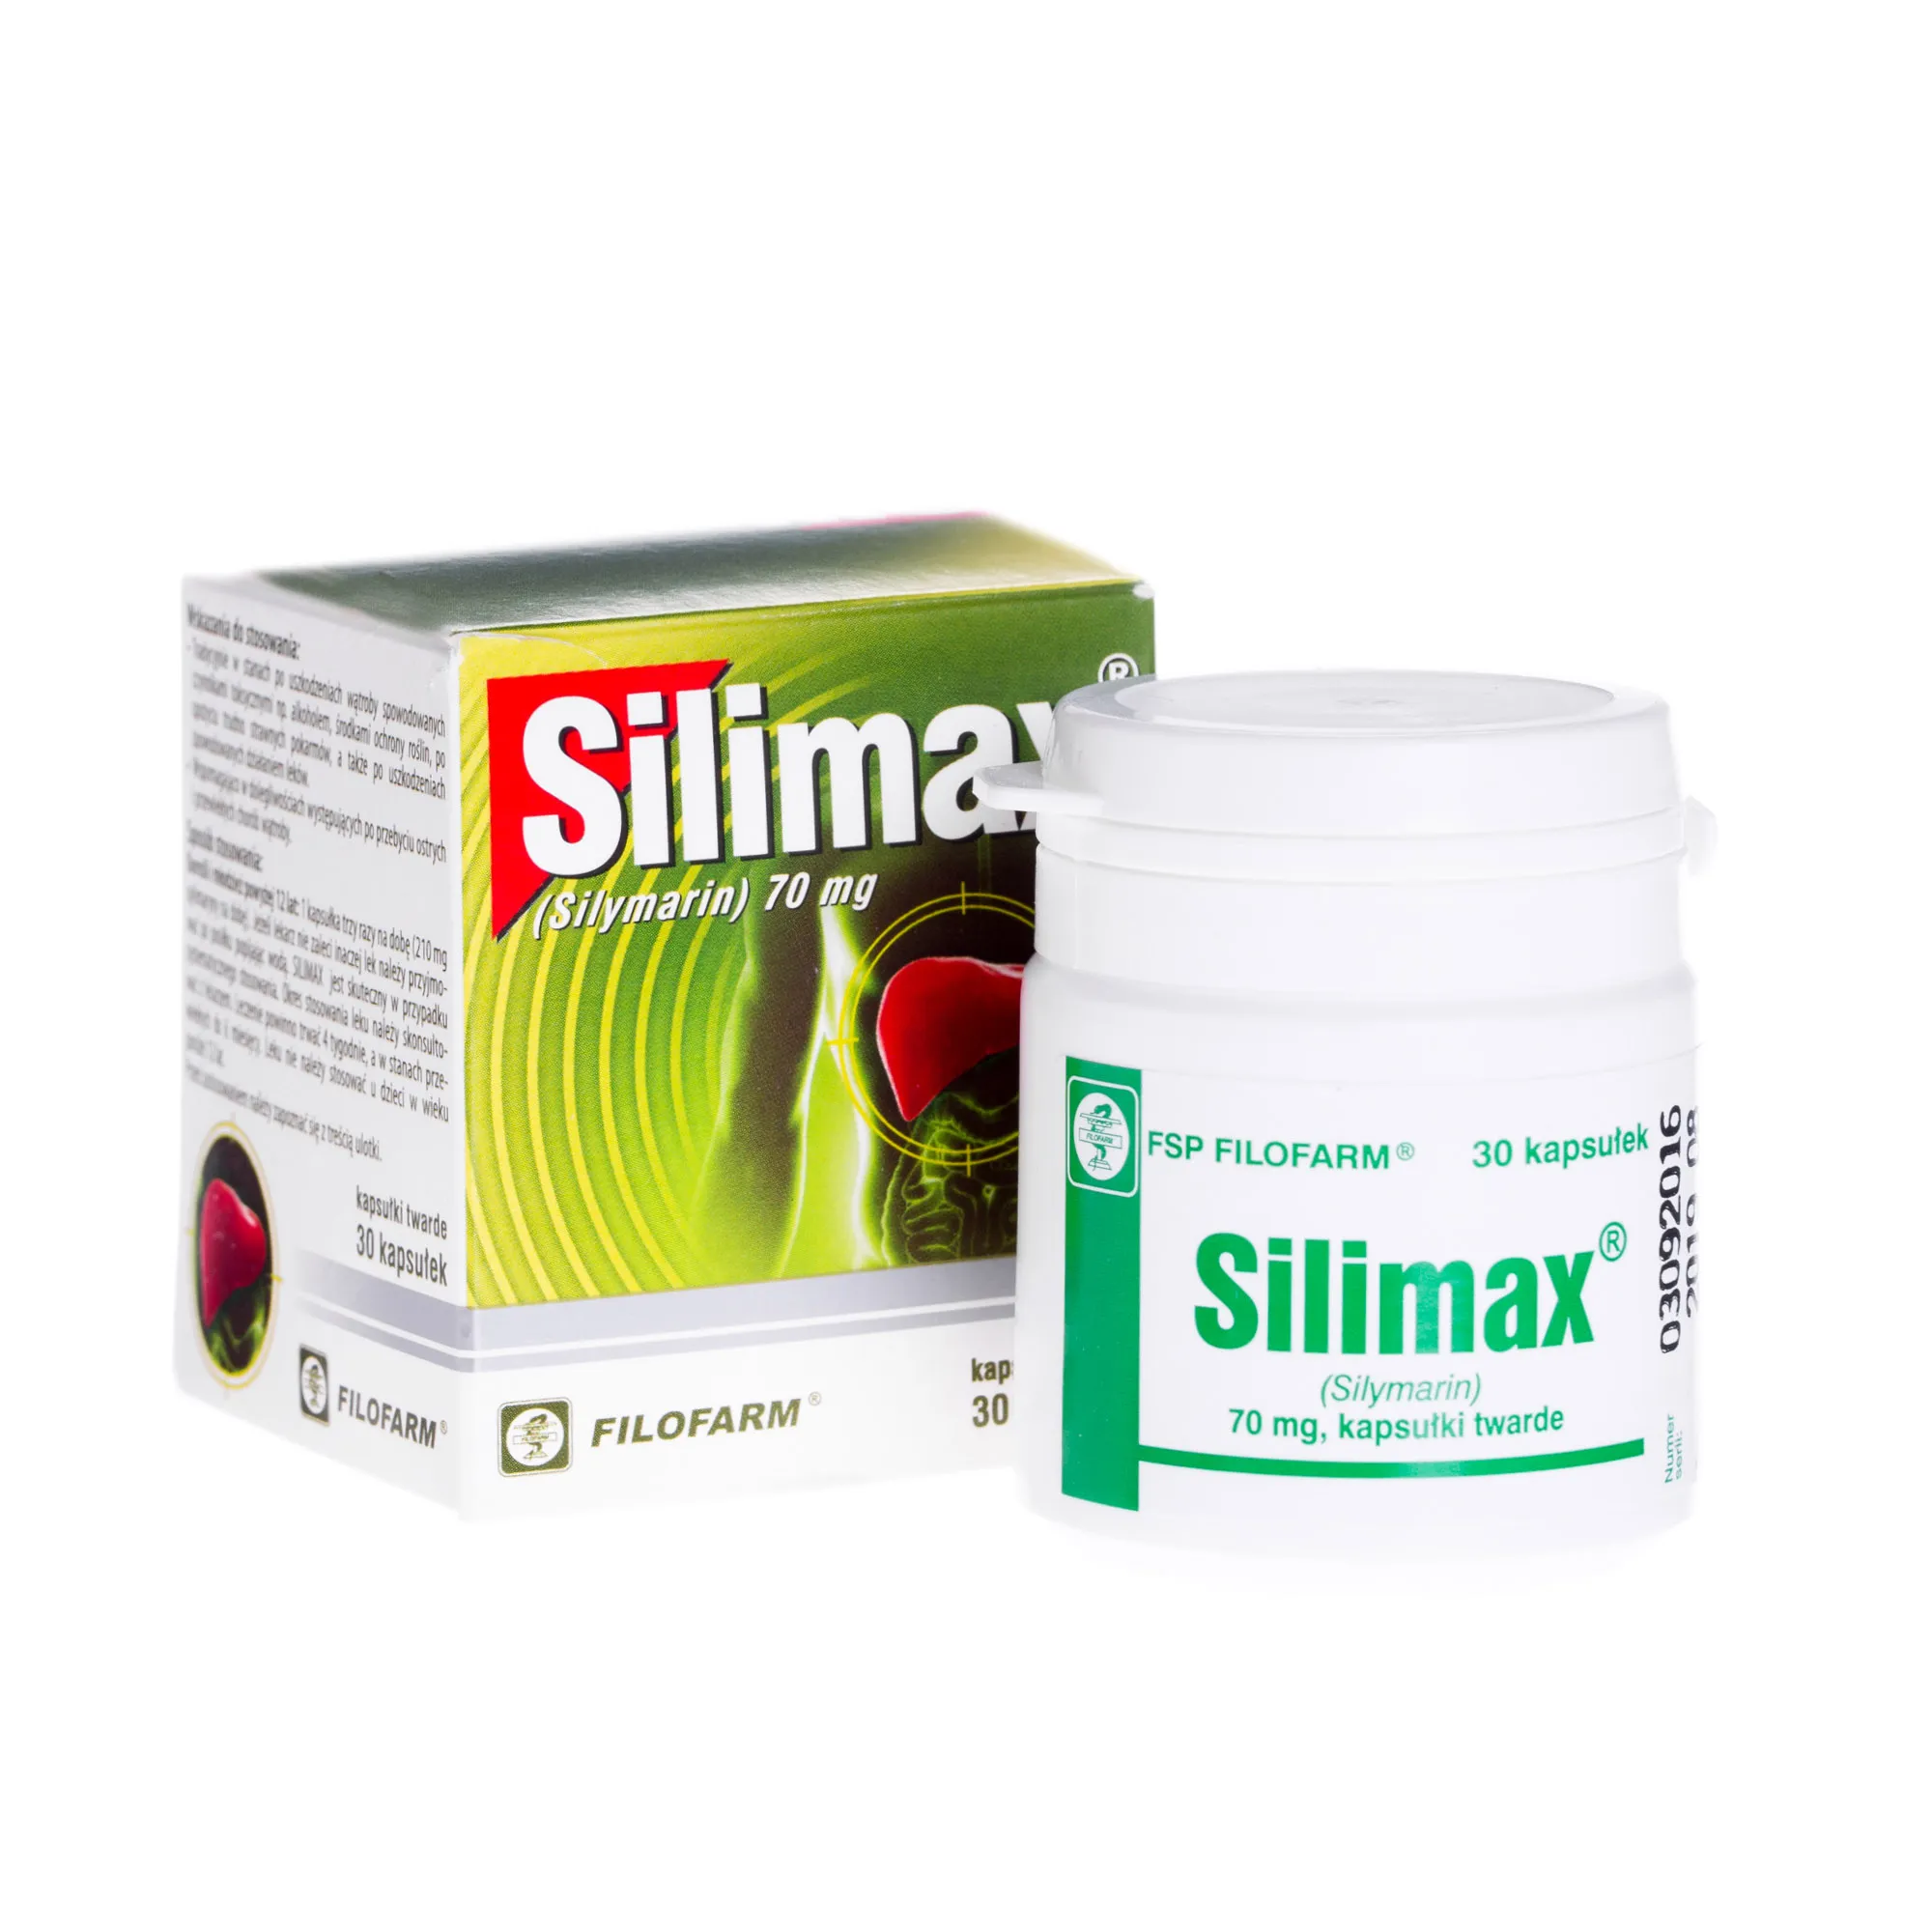 Silimax 70 mg - 30 kapsułek twardych